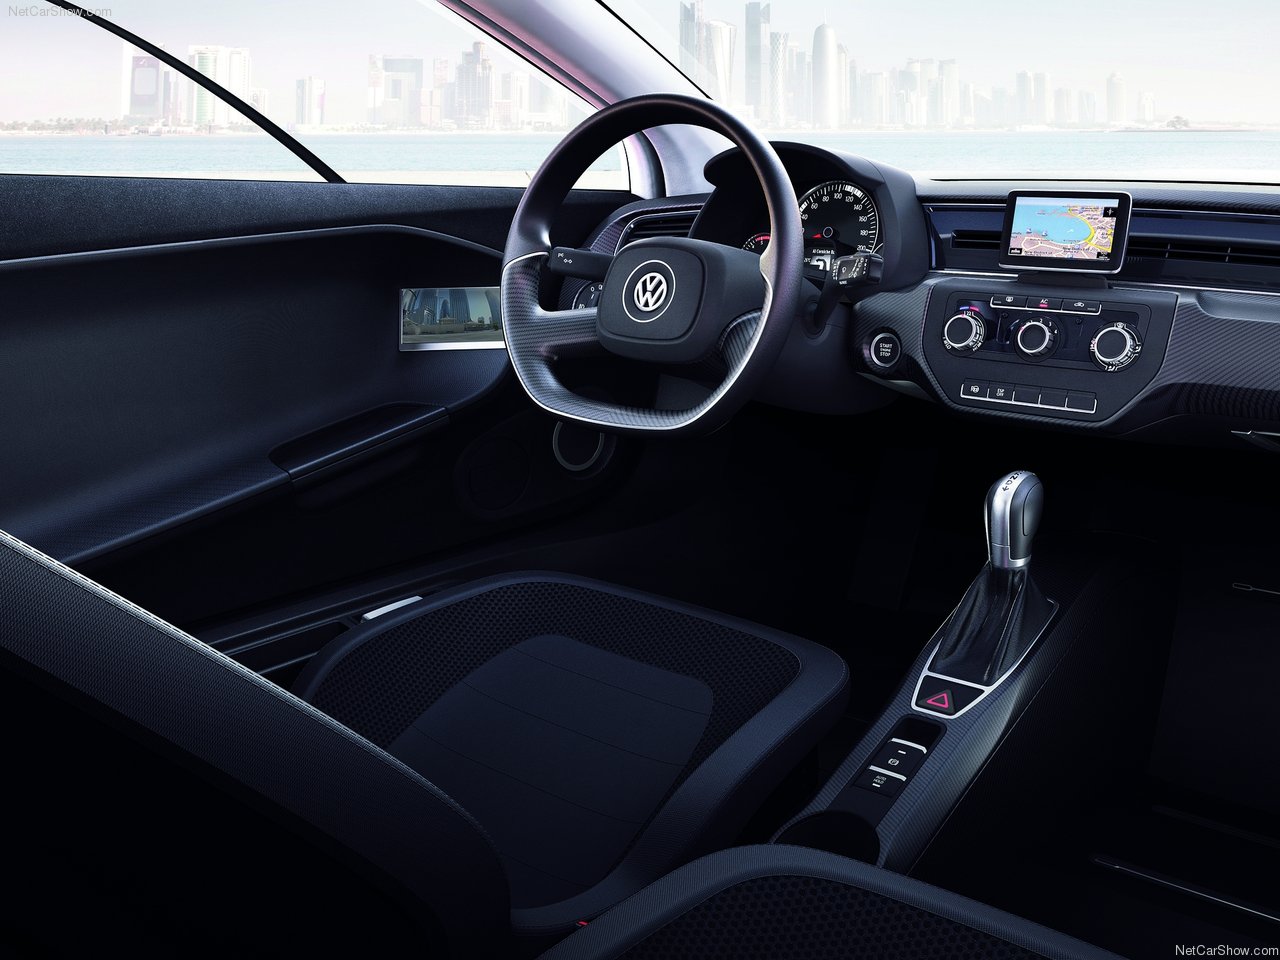 Volkswagen XL1 interior front view